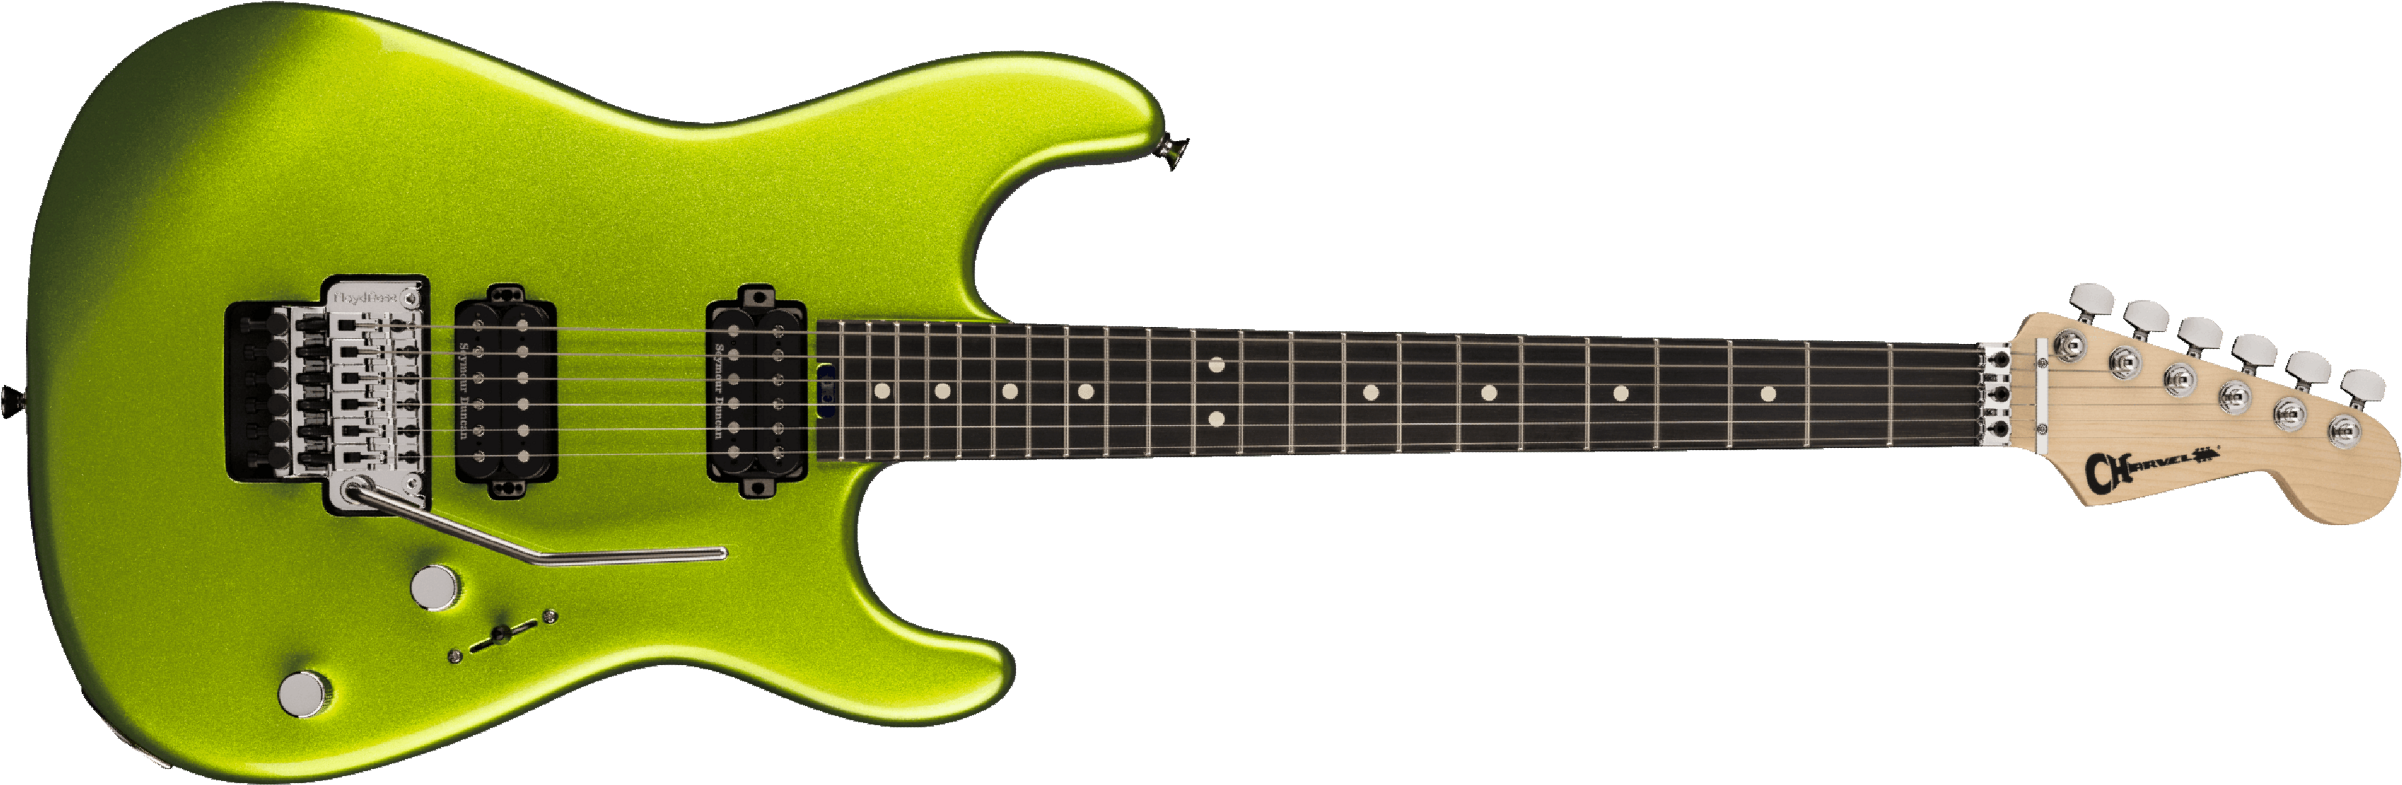 Charvel San Dimas Style 1 Hh Fr E Pro-mod Seymour Duncan Eb - Lime Green Metallic - Str shape electric guitar - Main picture